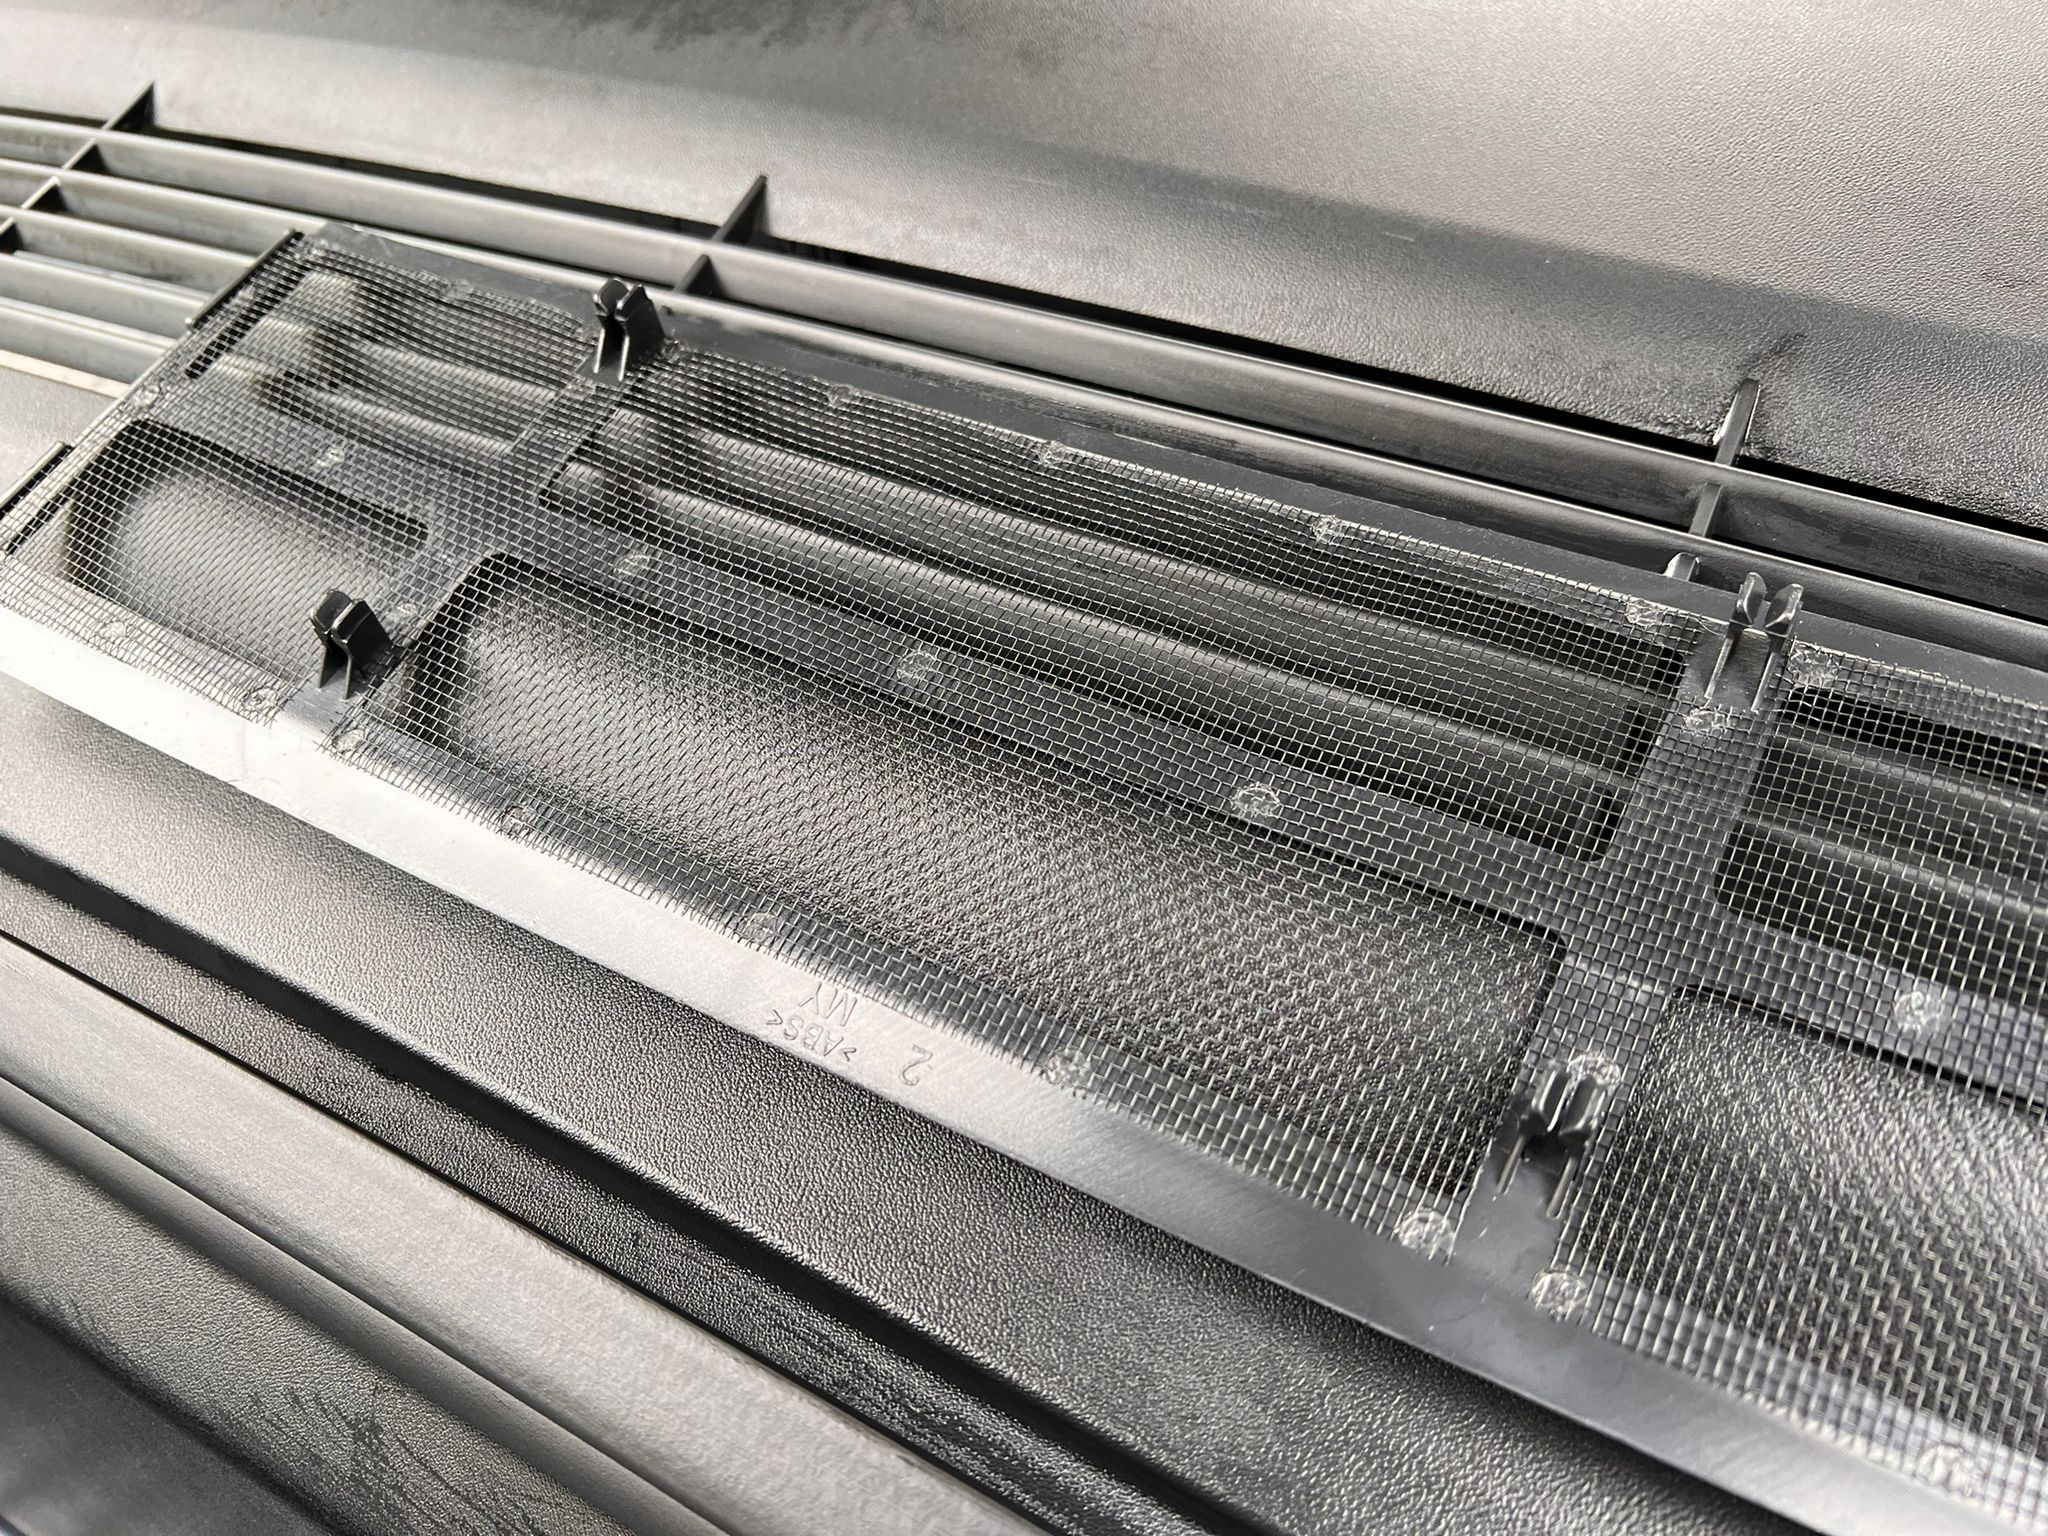 Ventilation grille model Y